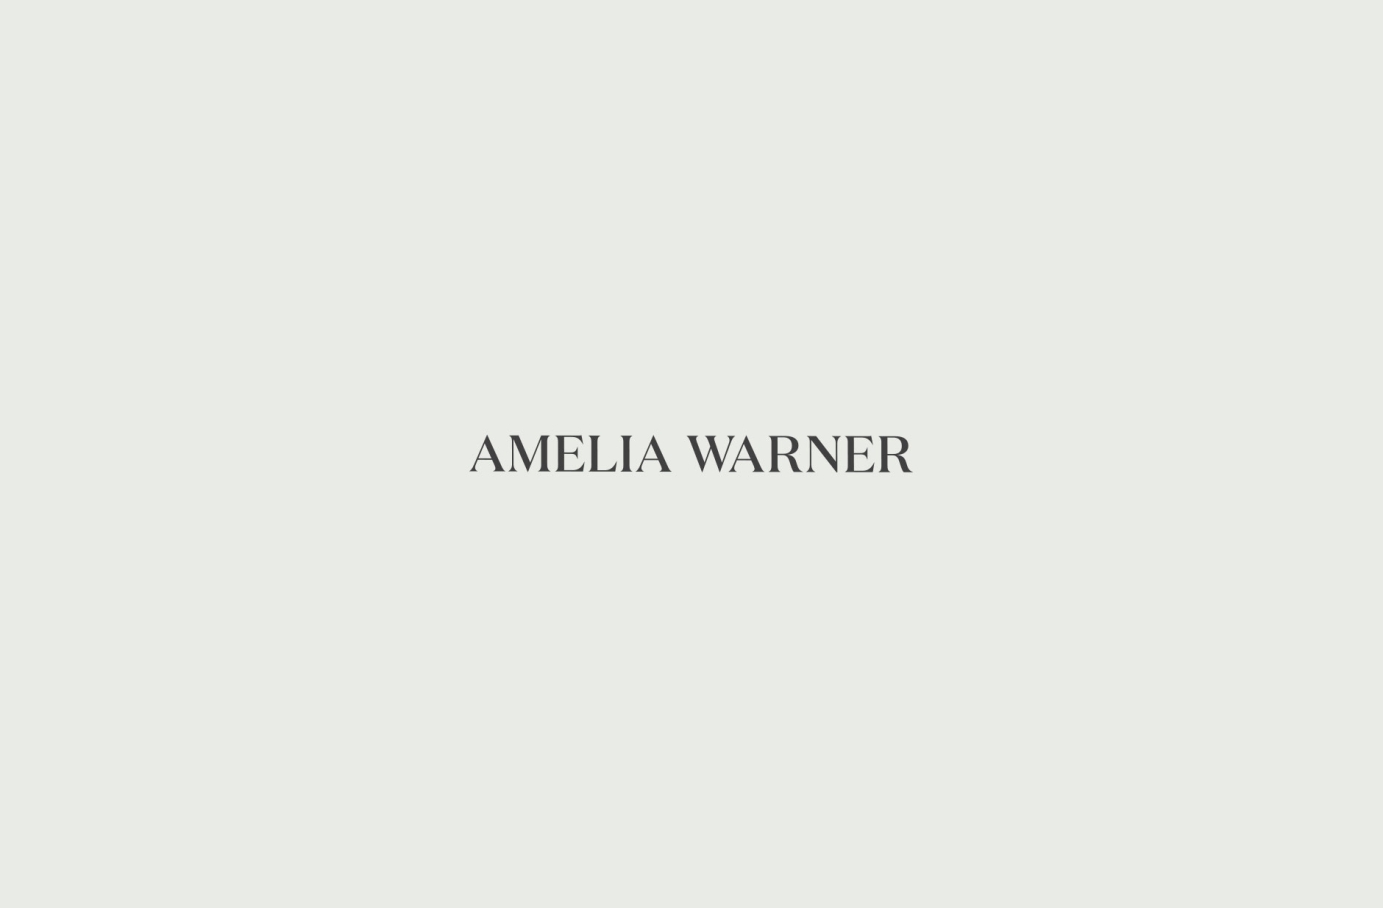 Graphic design for Amelia Warner by Tristan Palmer